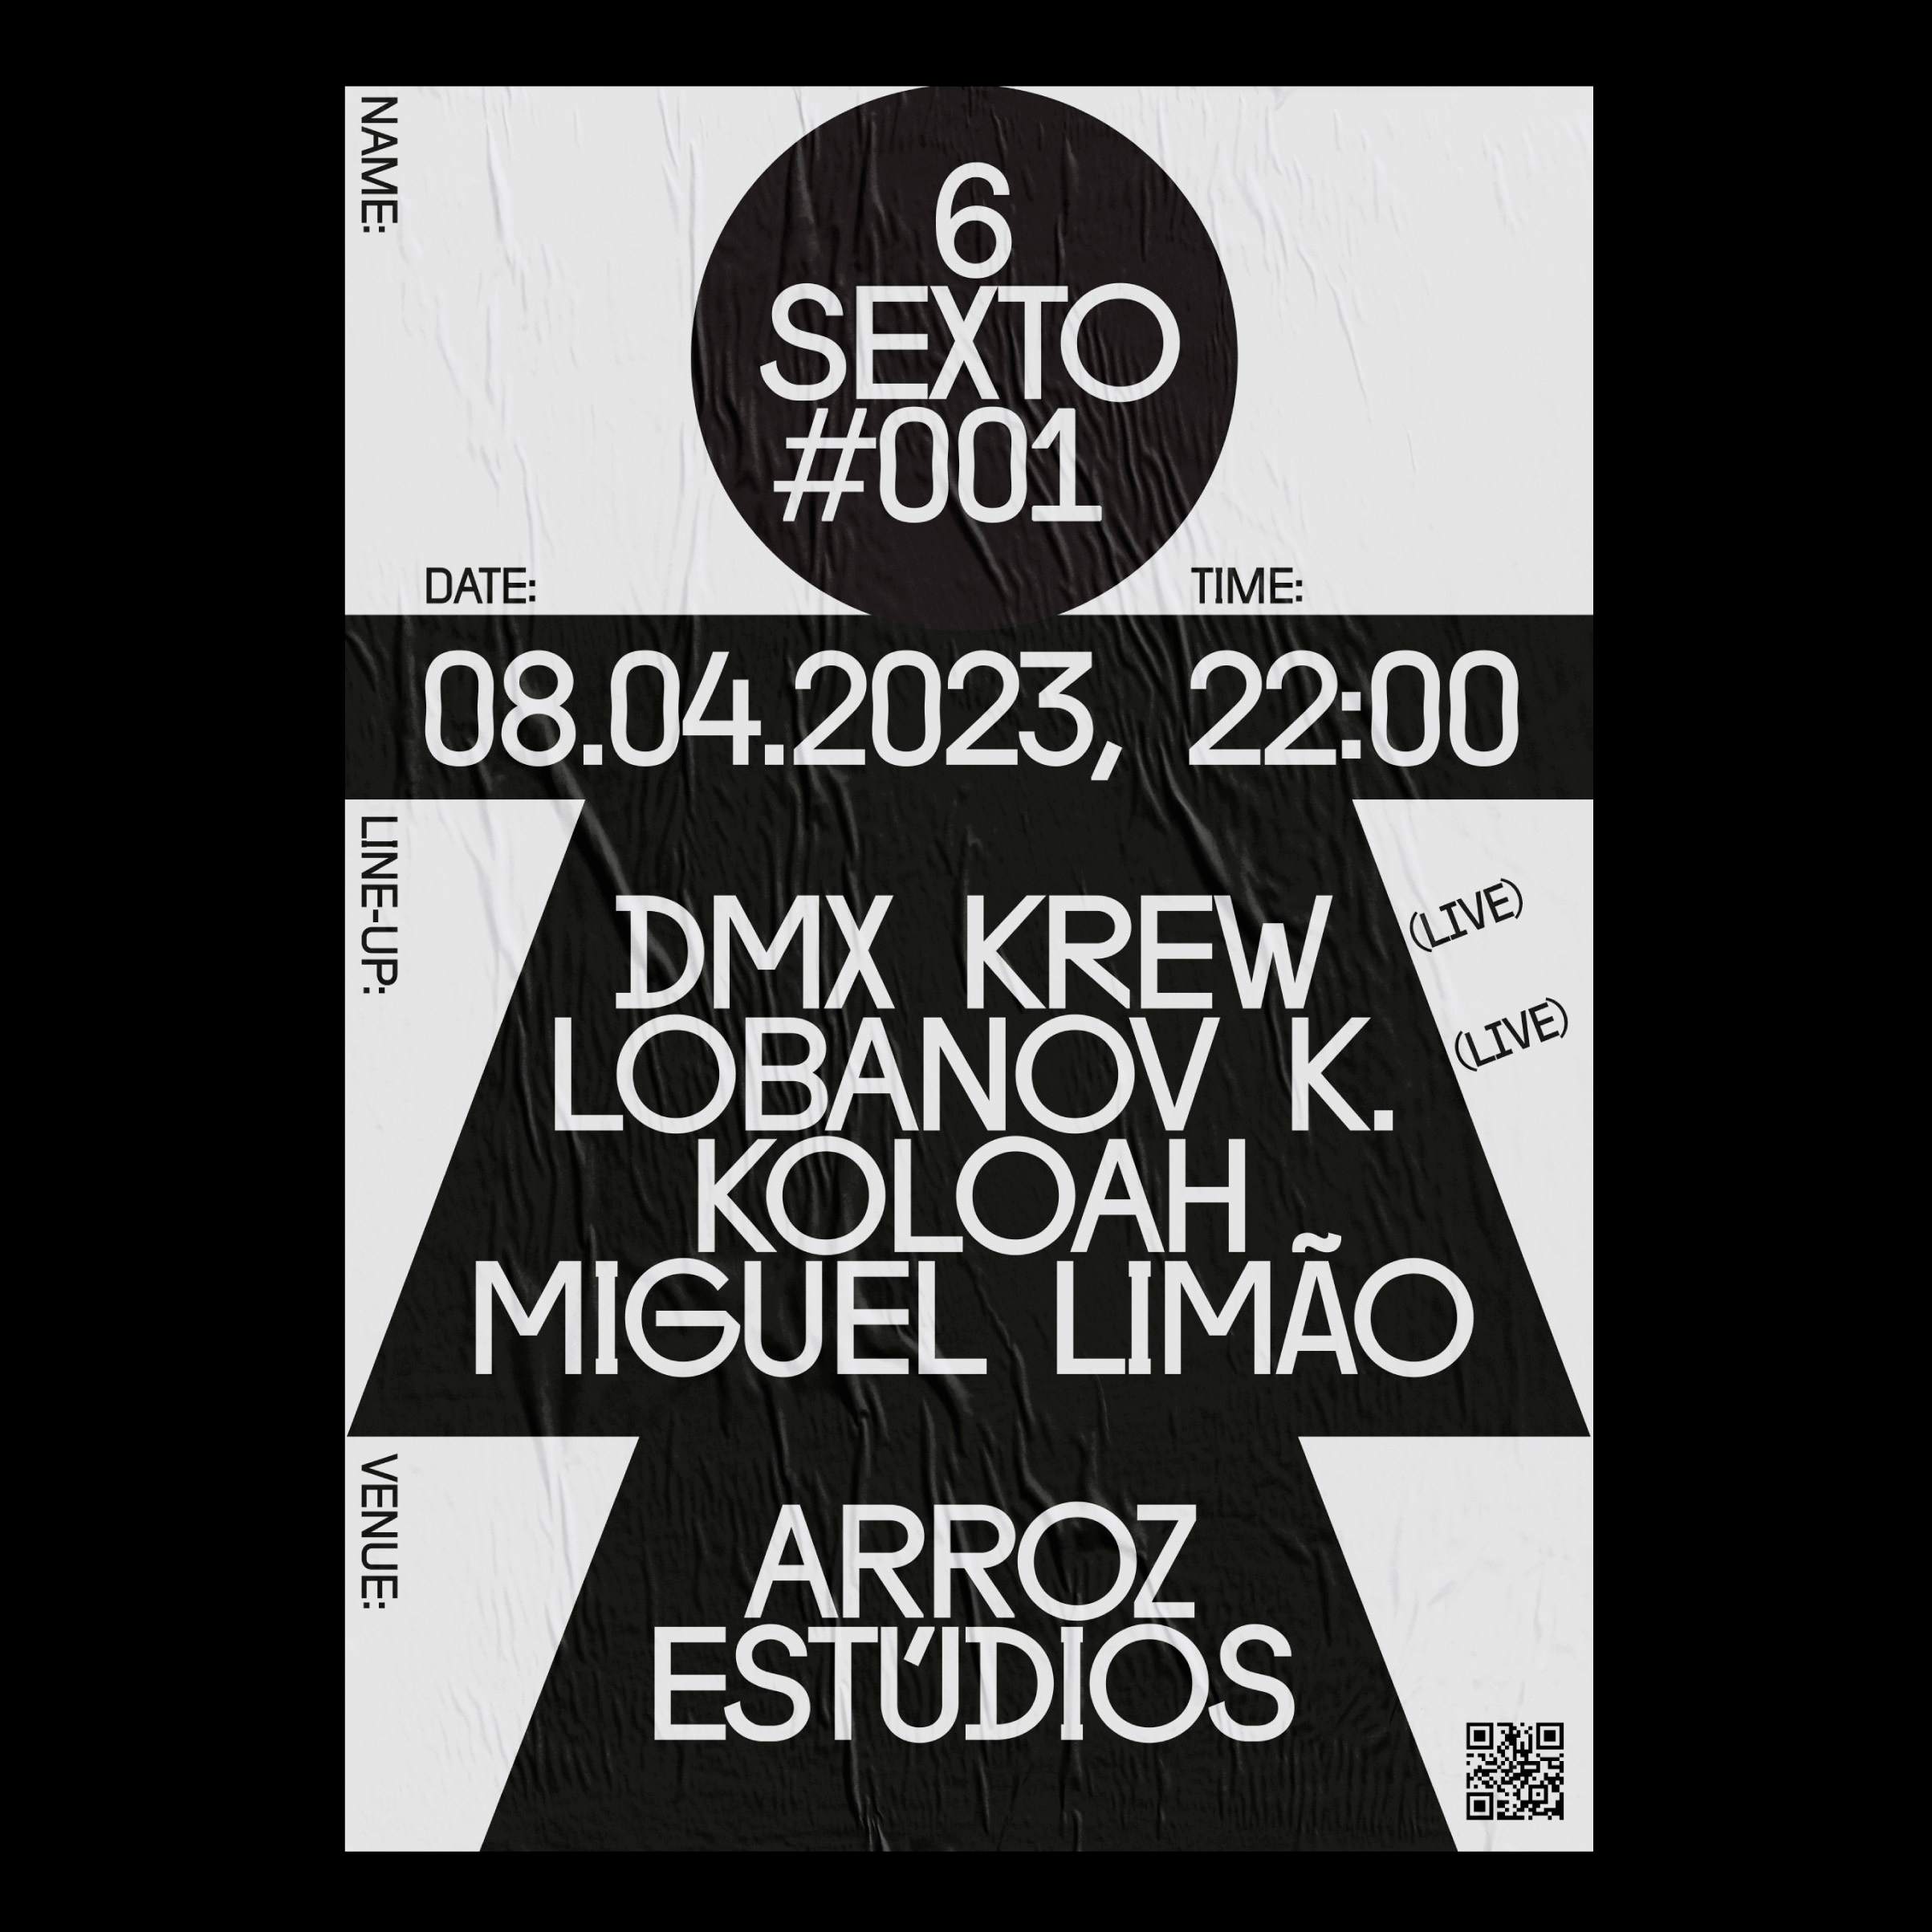 Sexto #001 with DMX Krew, Lobanov K., Koloah, Miguel Limão - フライヤー表